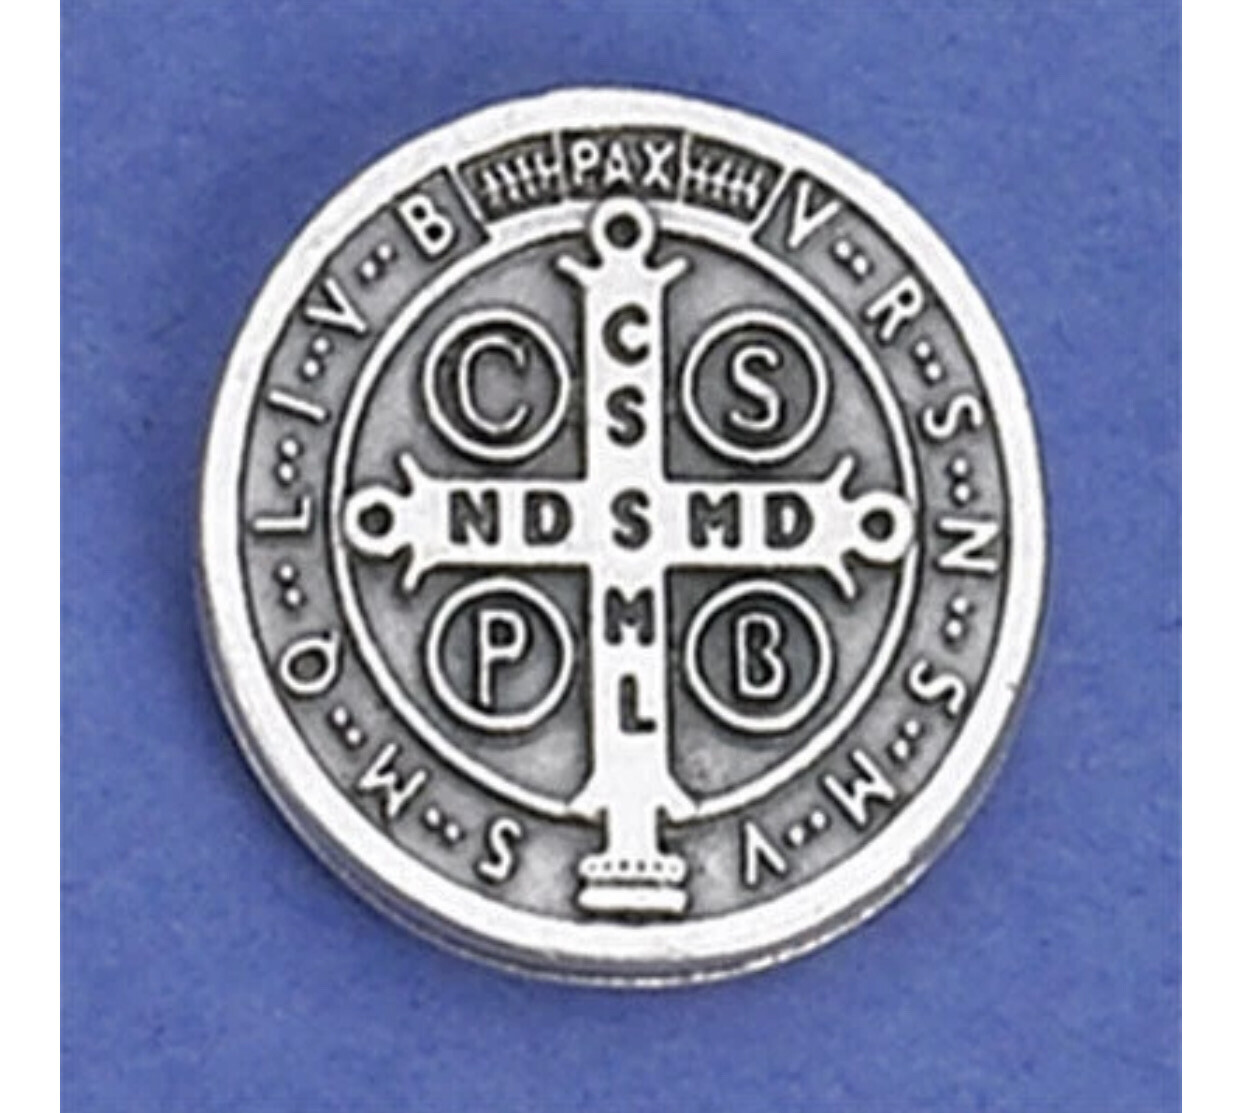 Saint Benedict Medal Lapel Pin
Silver Tone